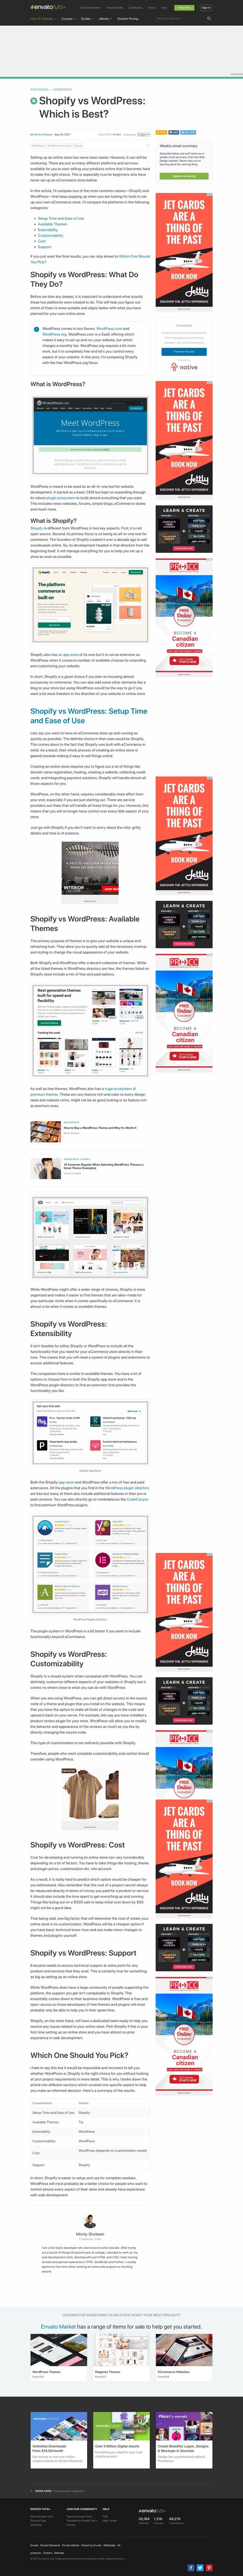 webdesign.tutsplus.com/articles/shopify-vs-wordpress-which-is-best--cms-38371